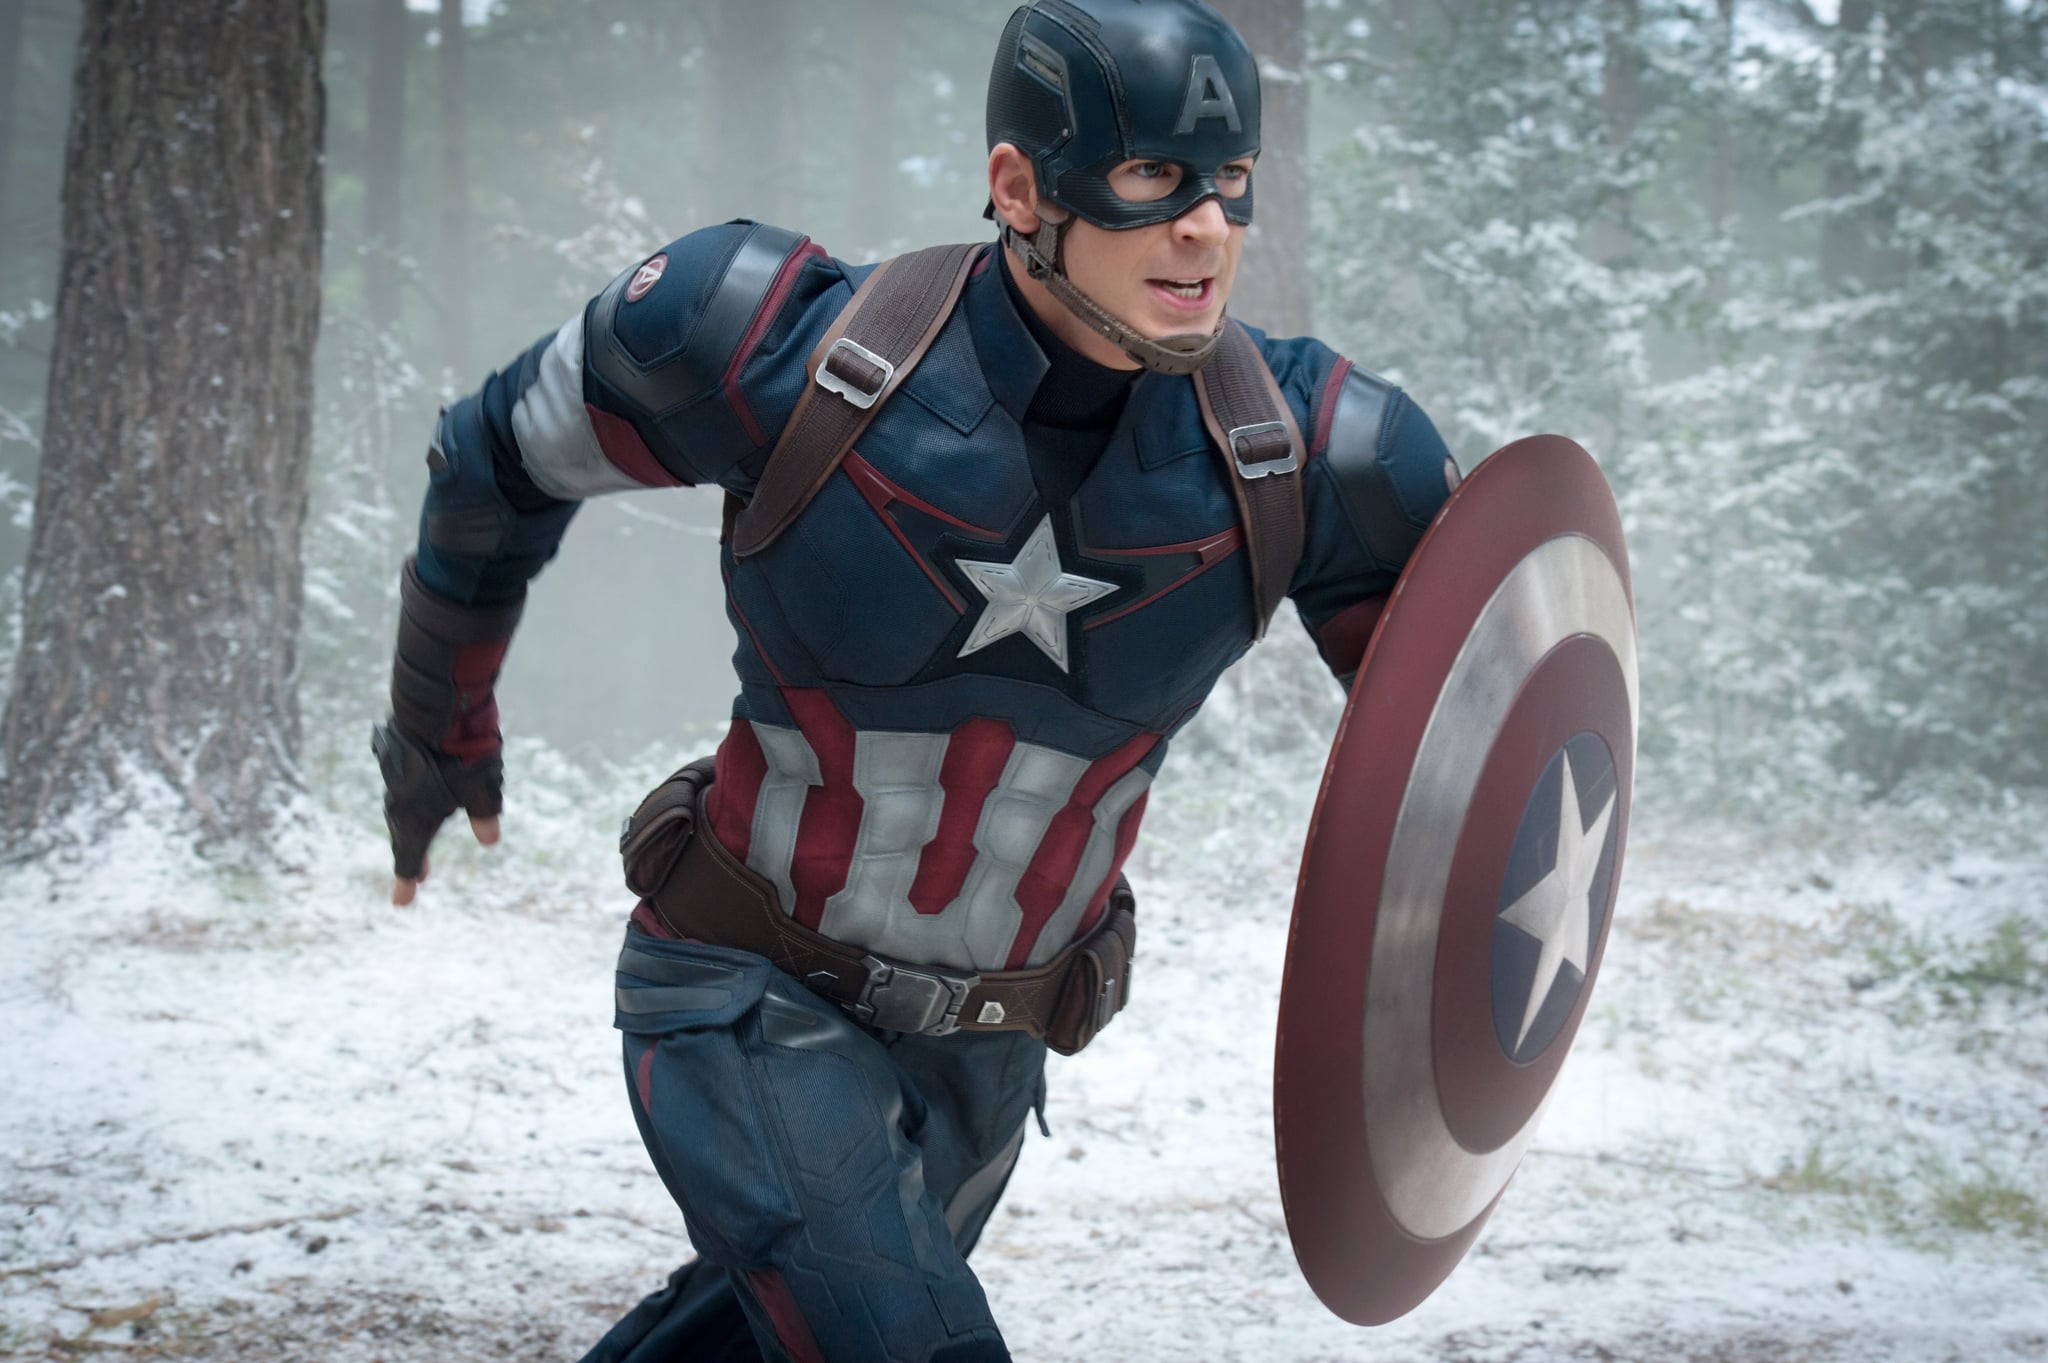 AVENGERS: AGE OF ULTRON, Chris Evans as Captain America, 2015. ph: Jay Maidment / Walt Disney Studios Motion Pictures / courtesy Everett Collection